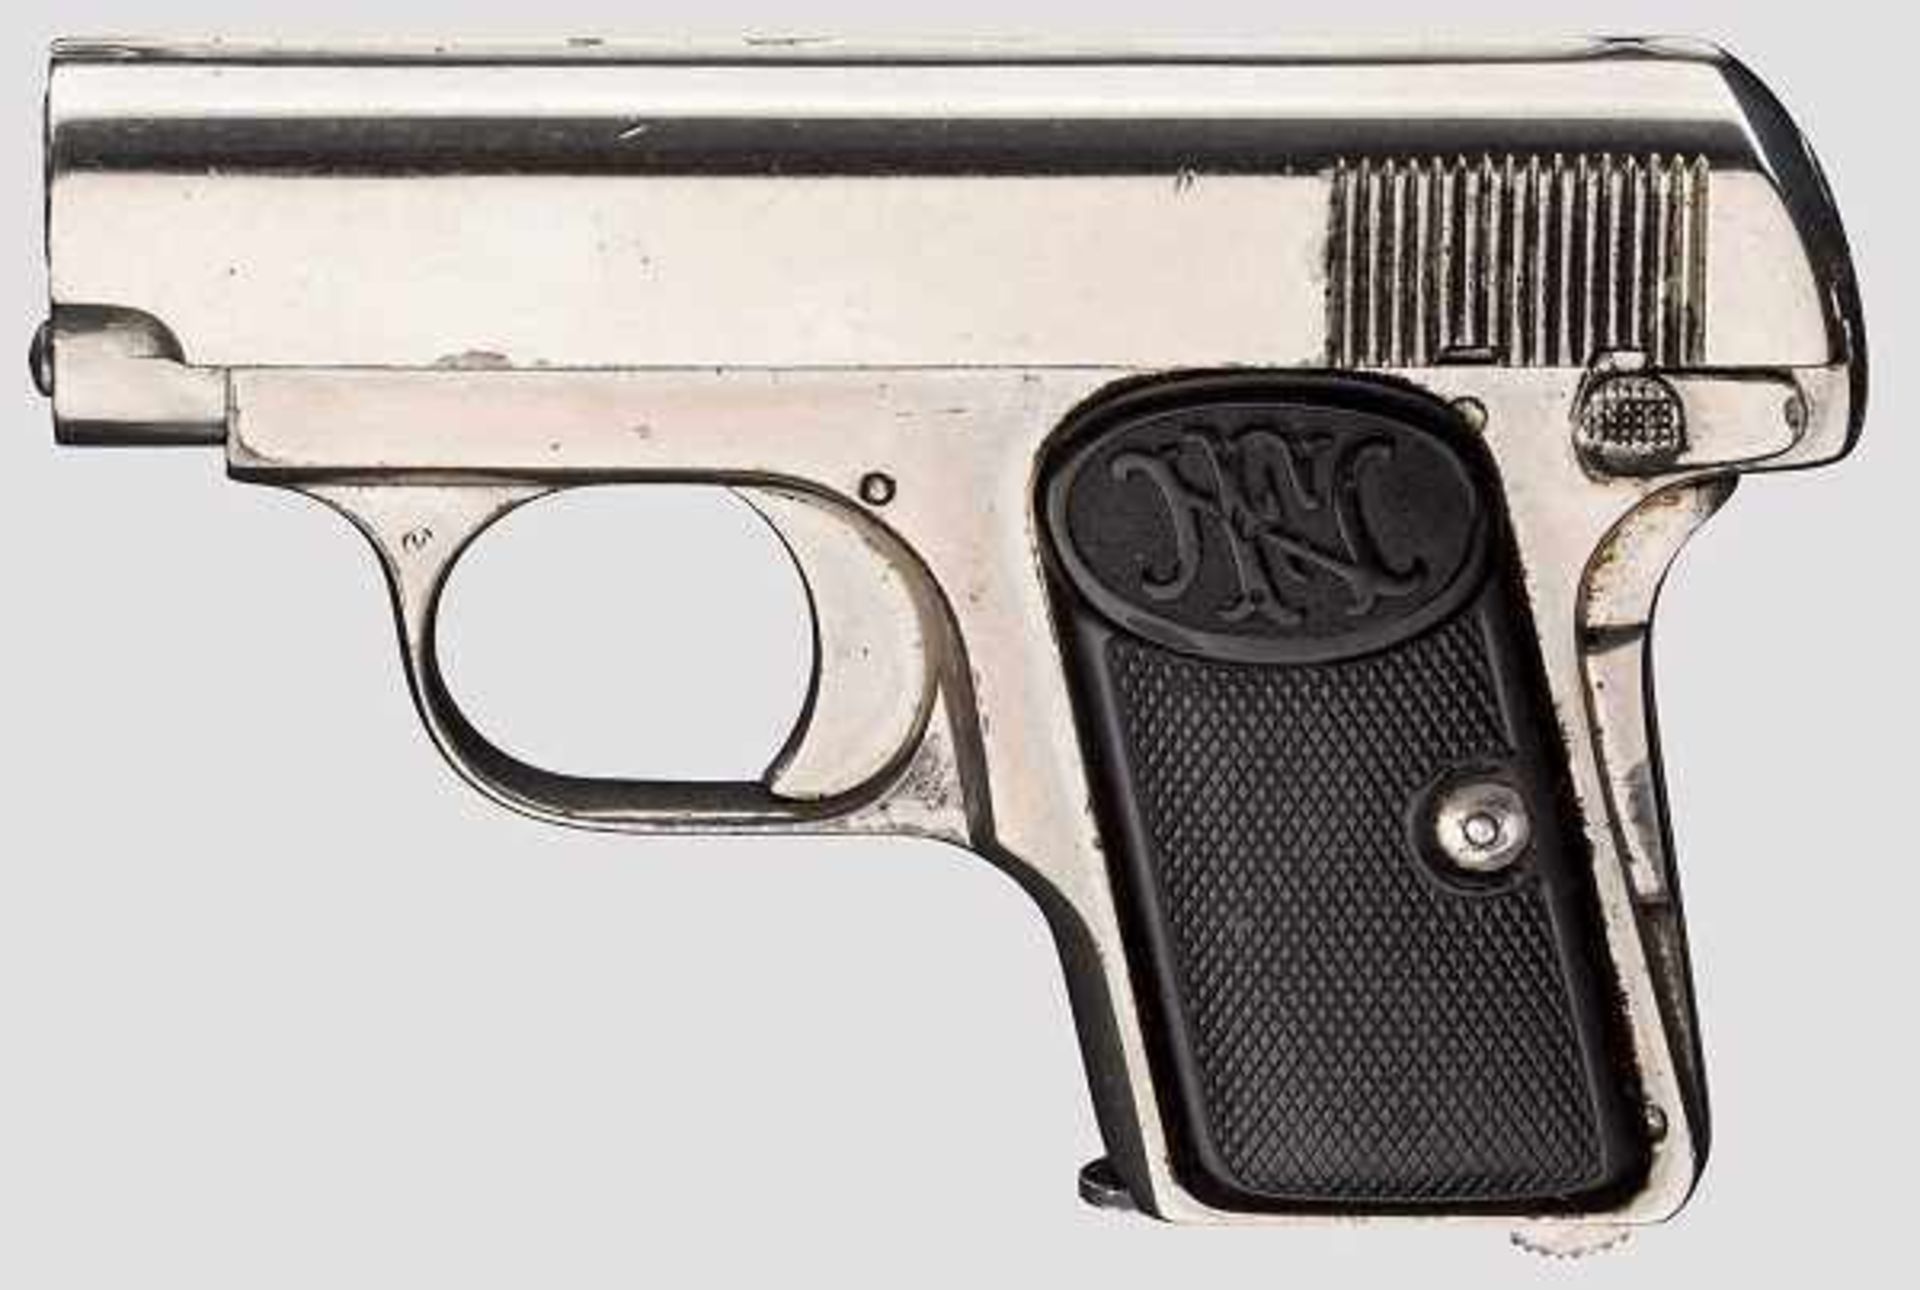 FN Mod. 1906, vernickelt Kal. 6,35 mm, Nr. 189314. Nummerngleich. Lauf matt. Sechsschüssig. Gültiger